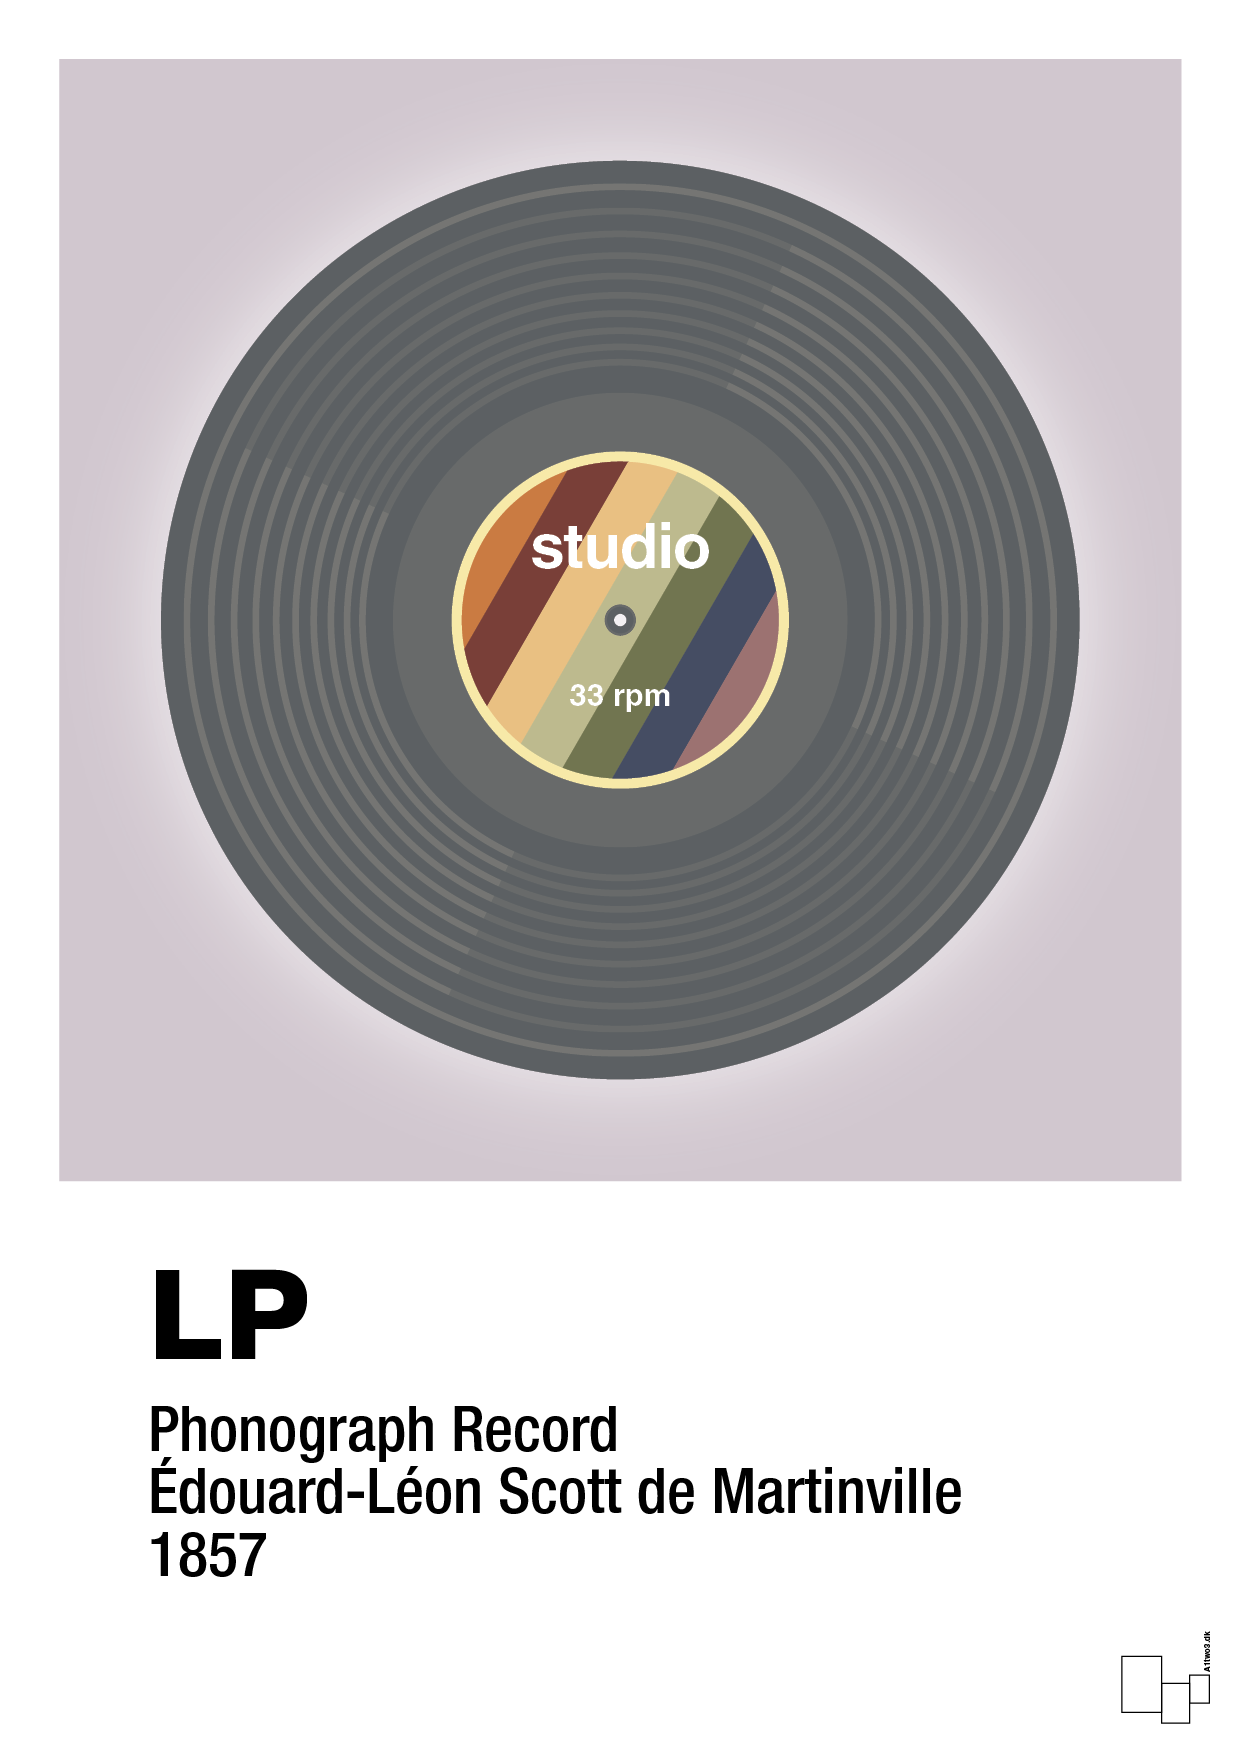 vinylplade 33rpm - Plakat med Grafik i Dusty Lilac